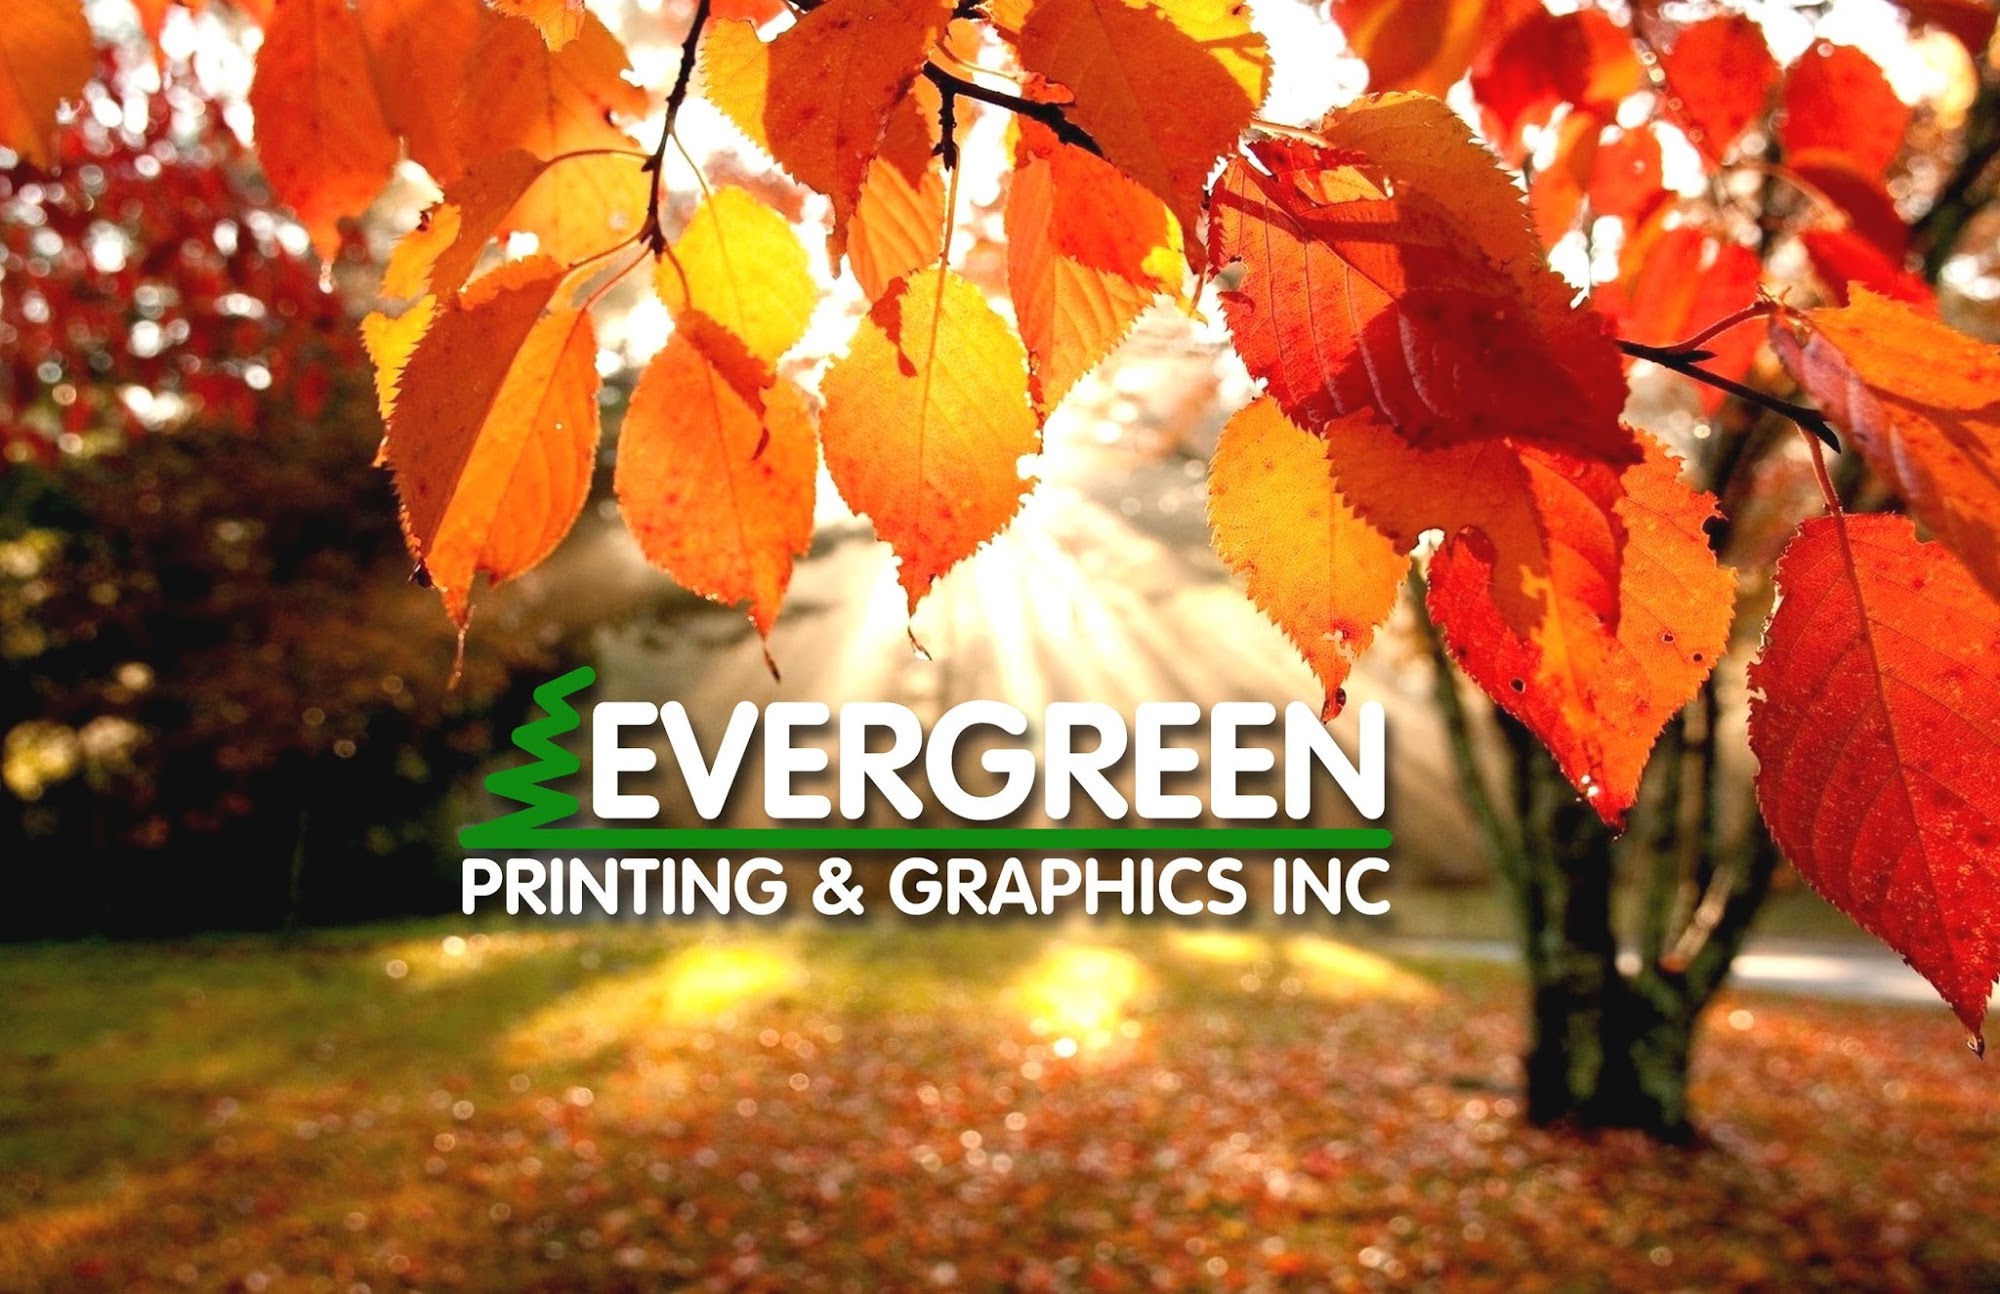 Evergreen Printing & Graphics, Inc.